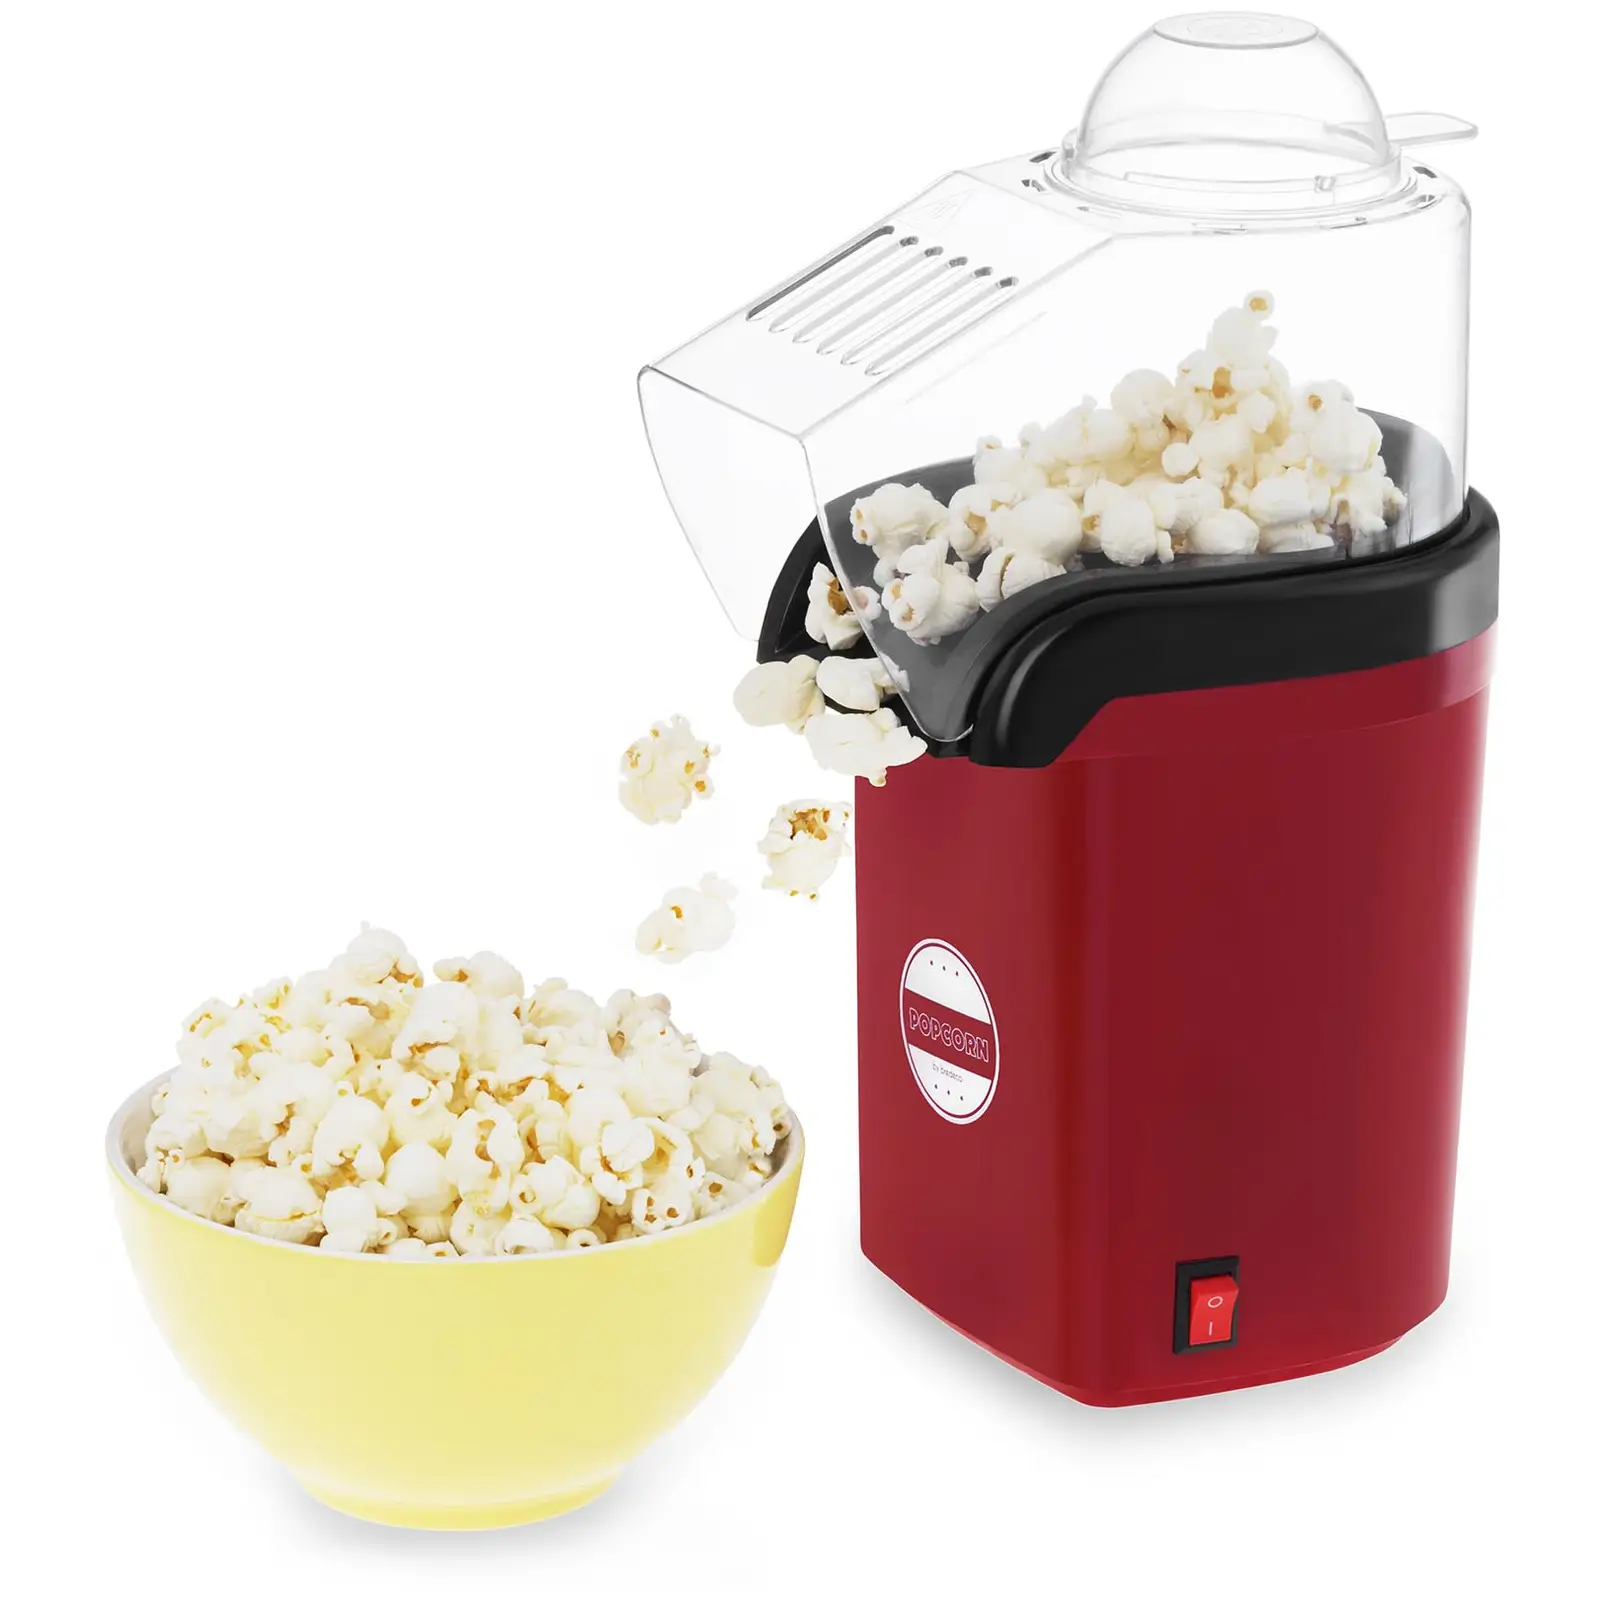 Horkovzdušný stroj na popcorn červený - Stroje na popcorn bredeco